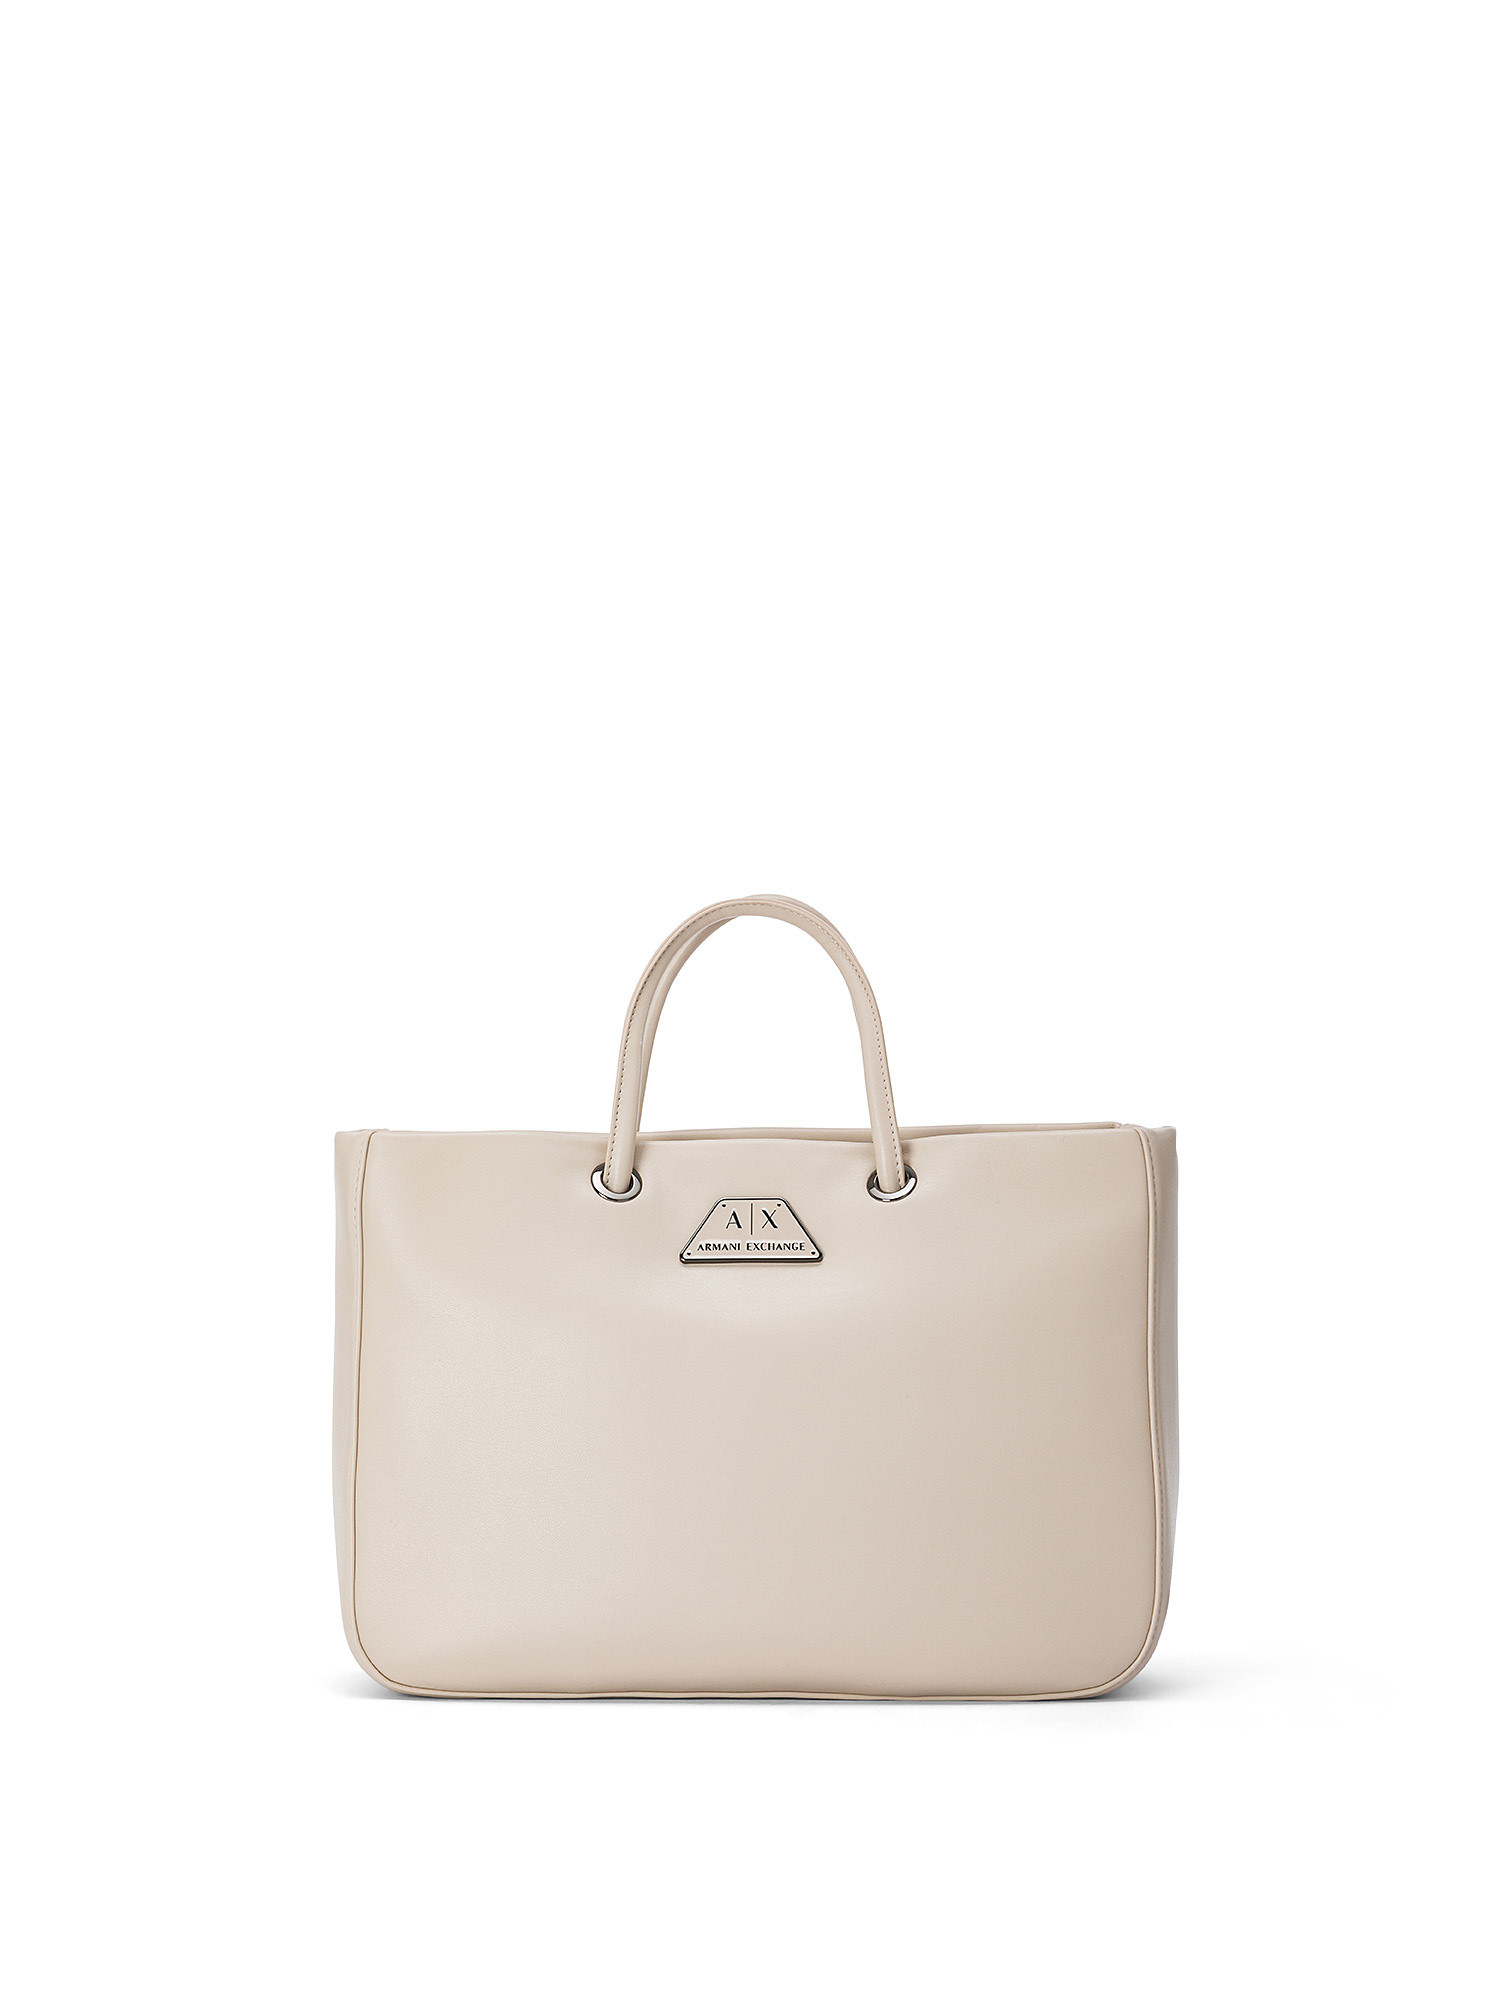 Armani Exchange - Handbag with logo, Beige, large image number 0